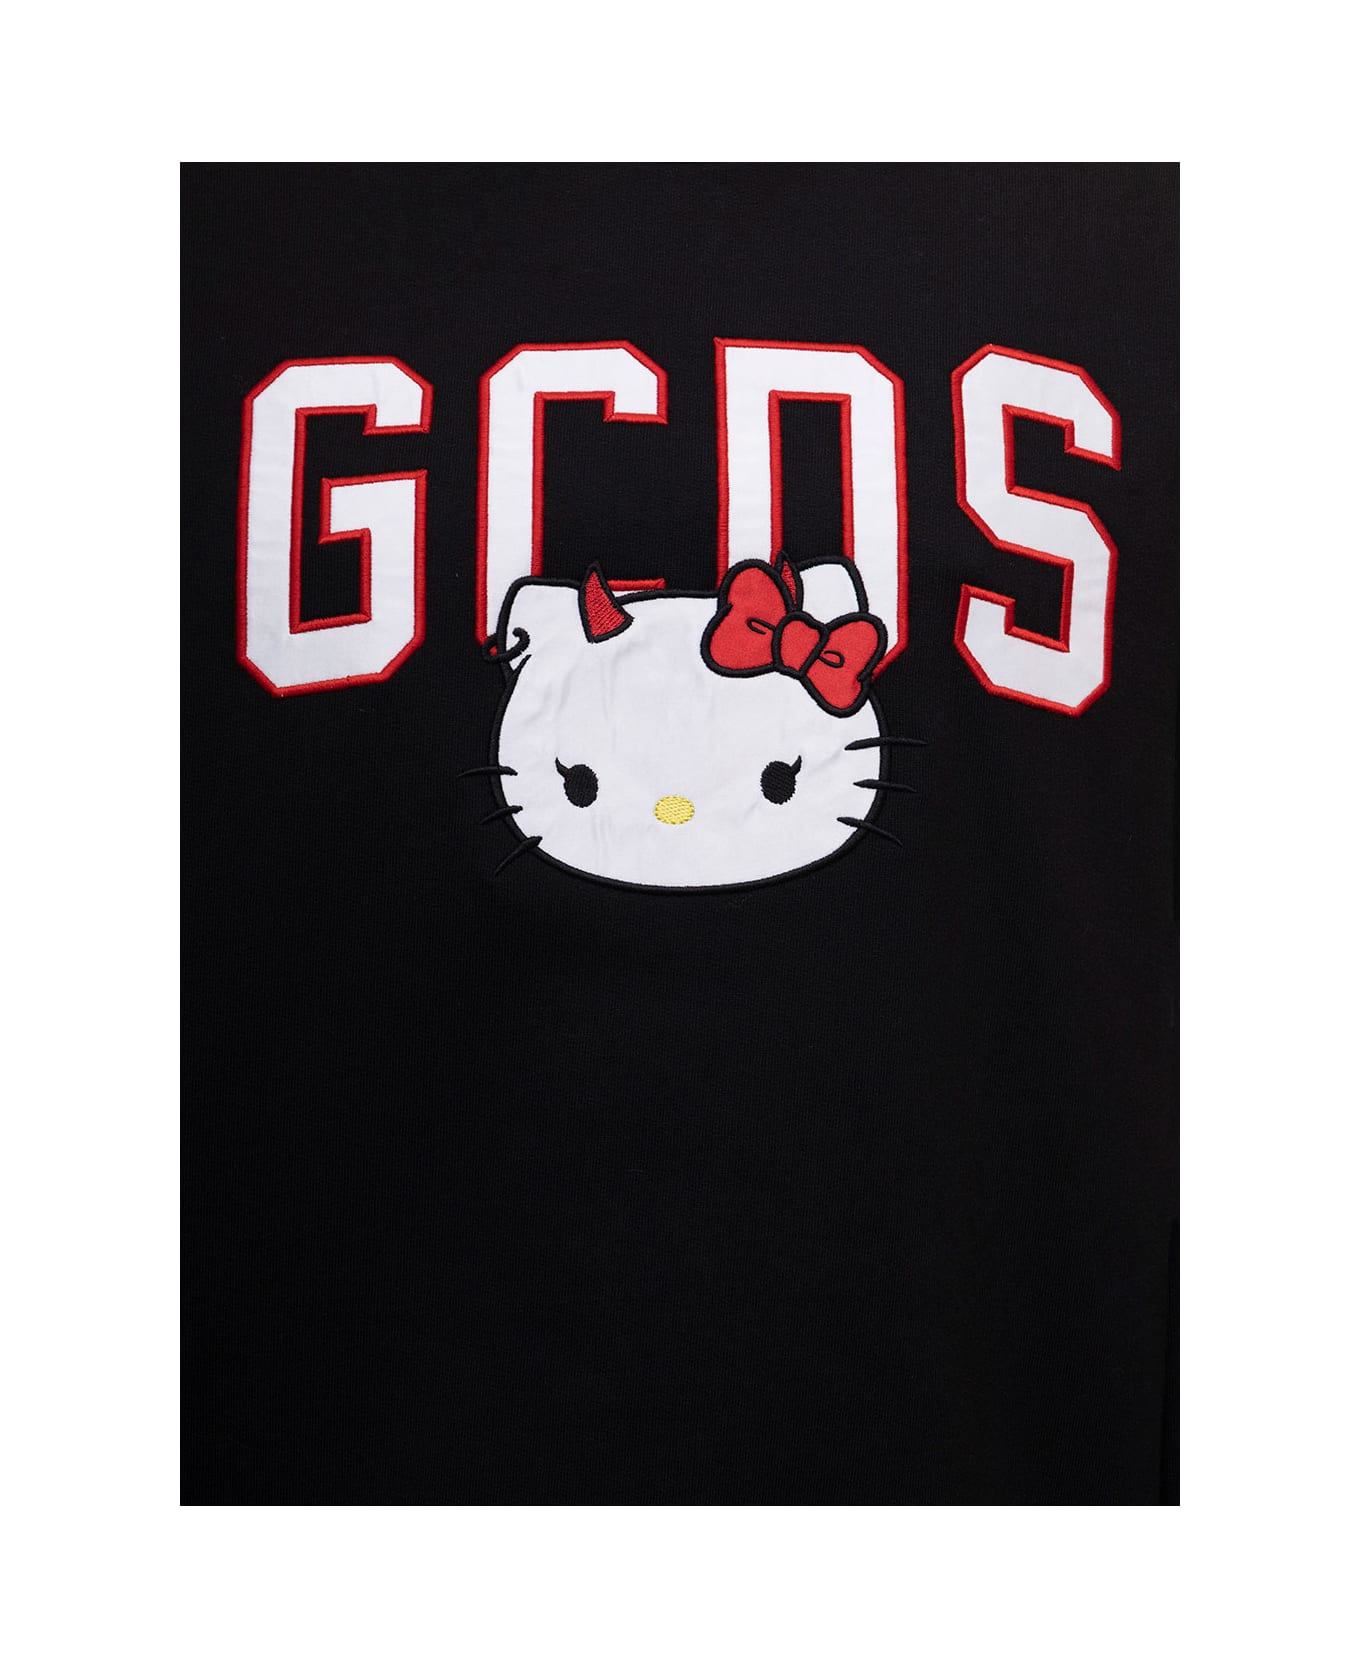 GCDS Black Sweatshirt In Fleece Cotton With Hello Kitty Print And Contrasting Logo Bands Gcds Woman - Black